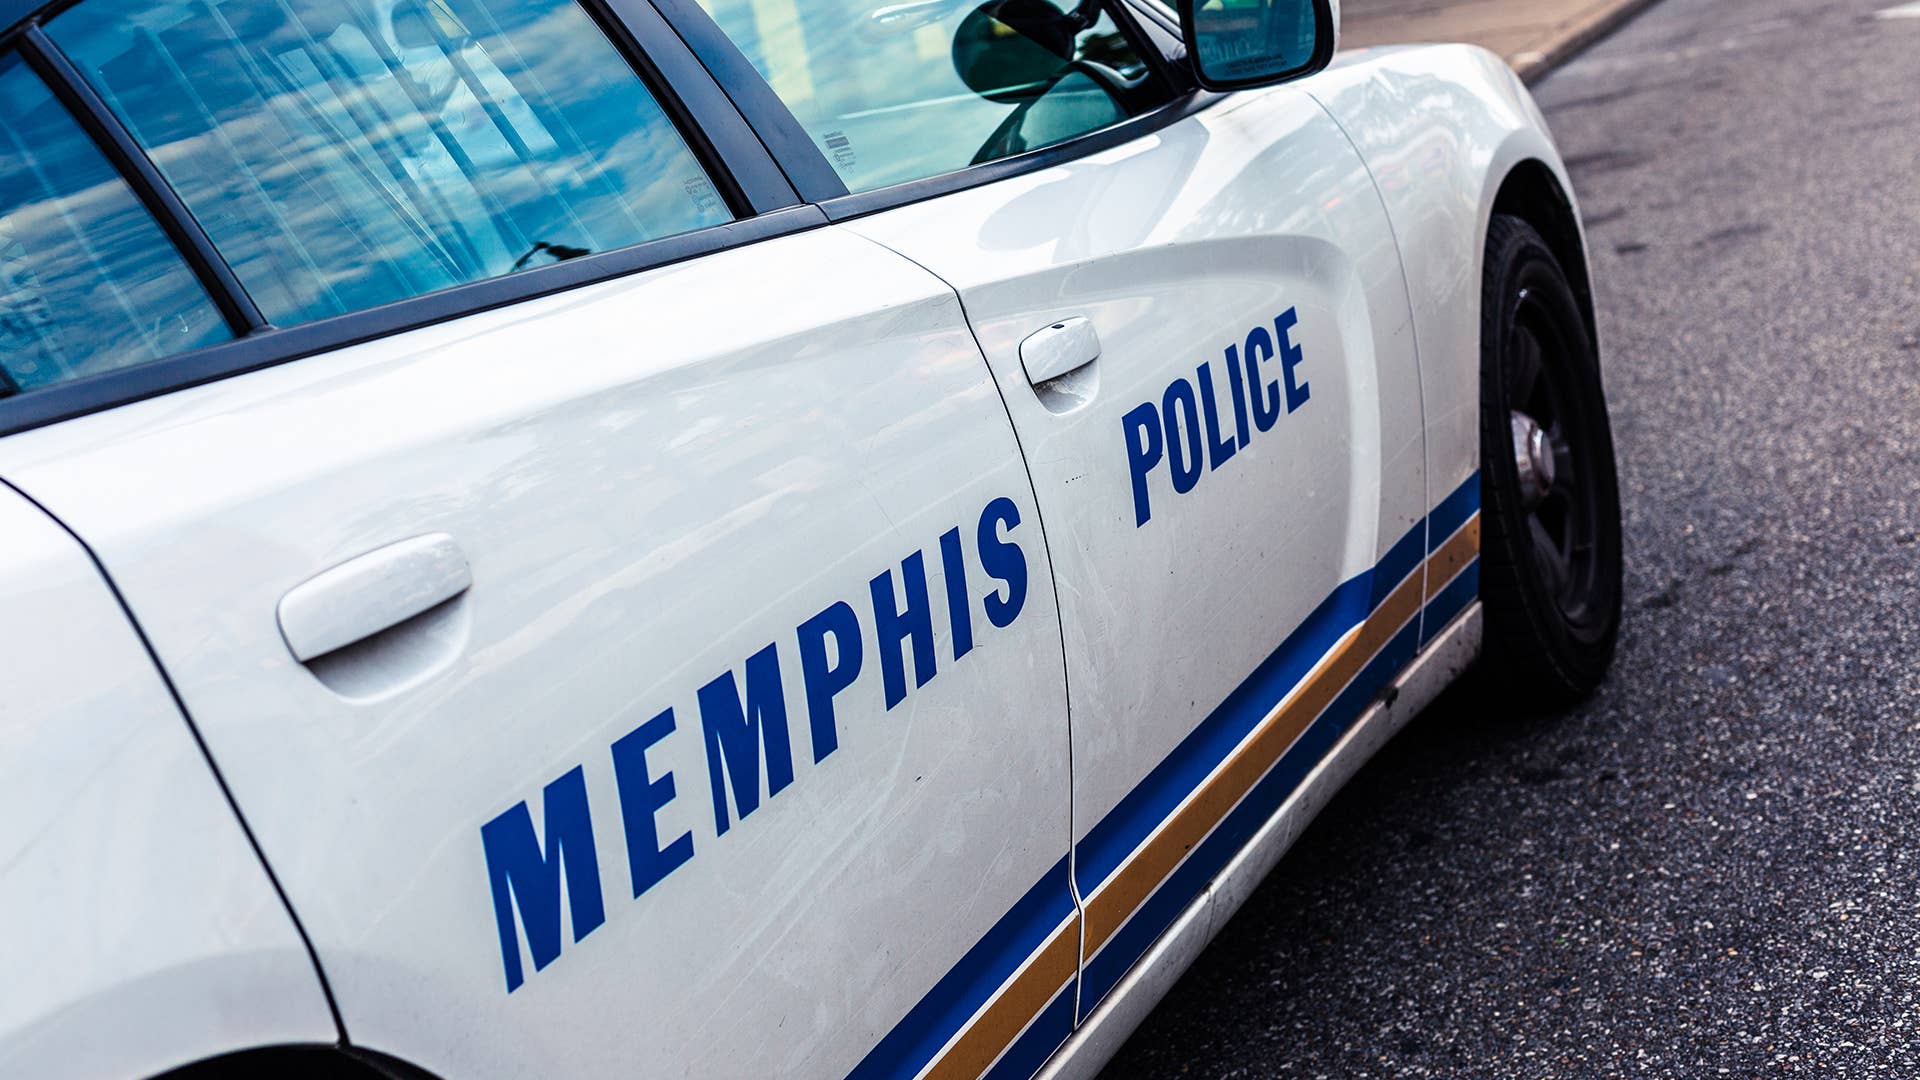 Memphis Police